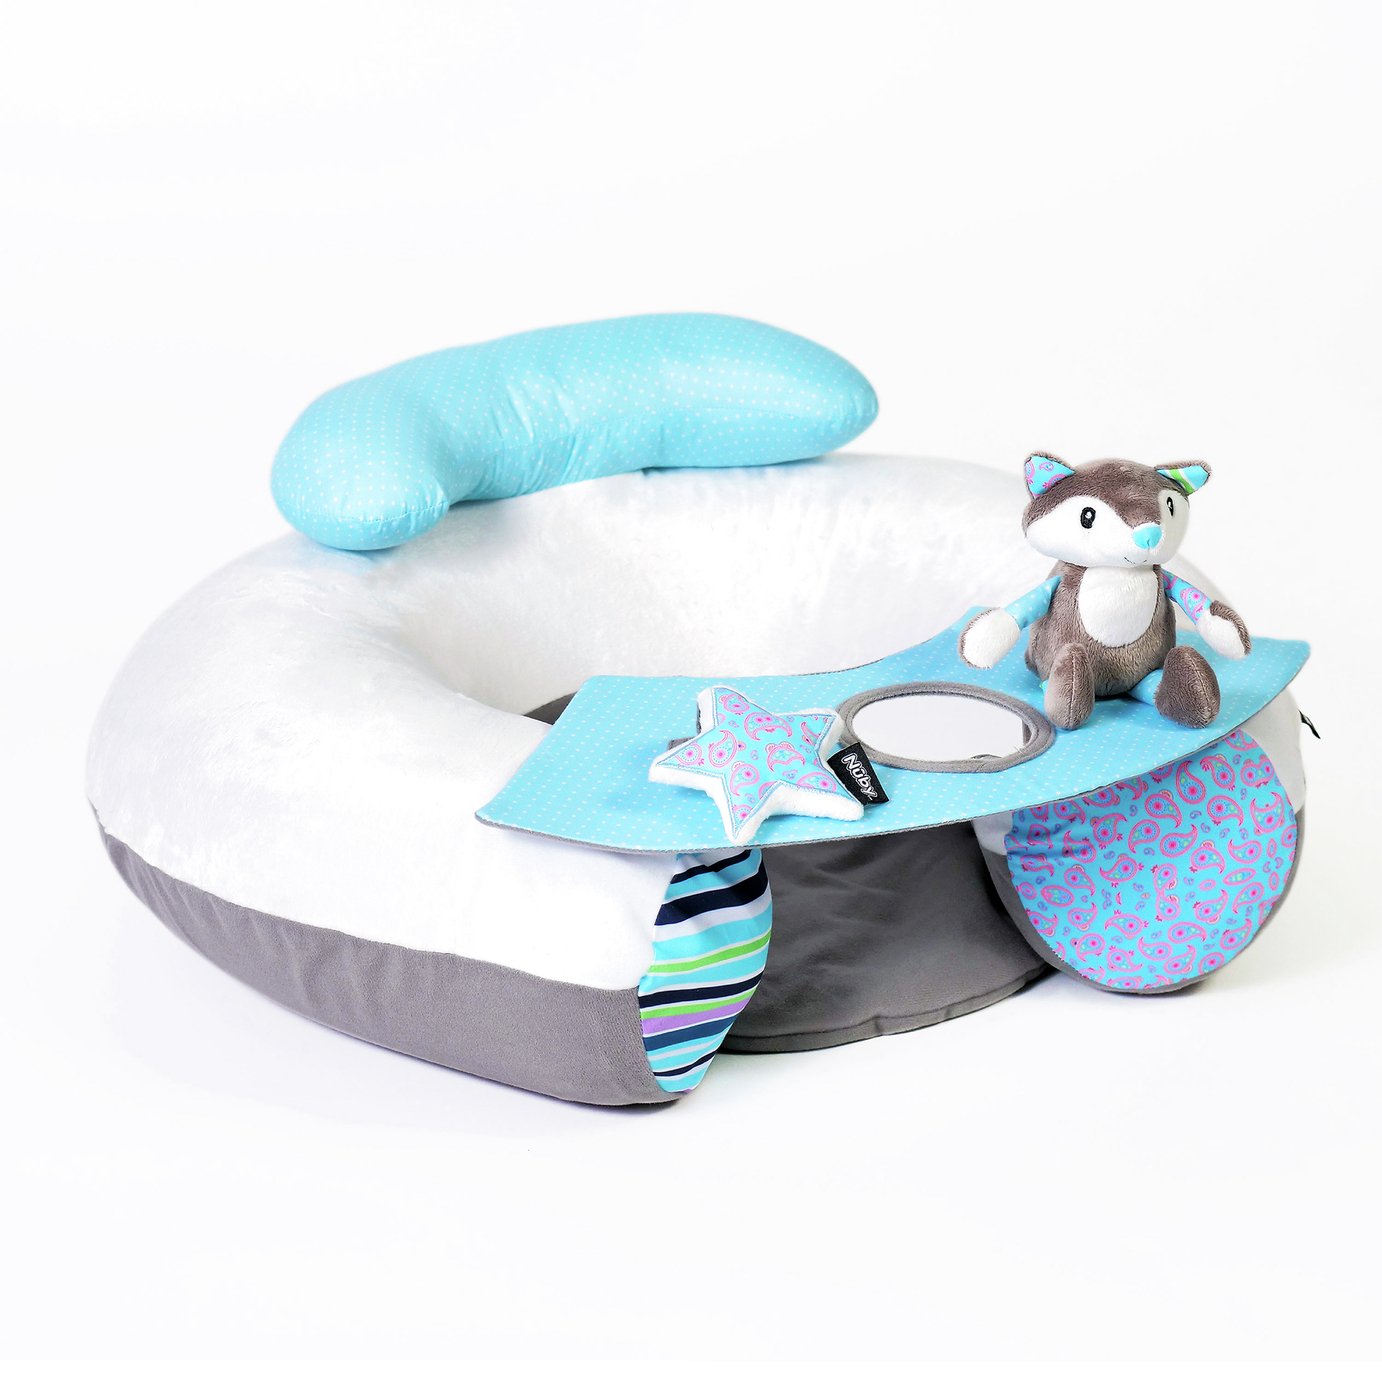 Nuby Little Fox Inflatable Sit Me Up Floor Seat 1481996 Argos Price Tracker Pricehistory Co Uk